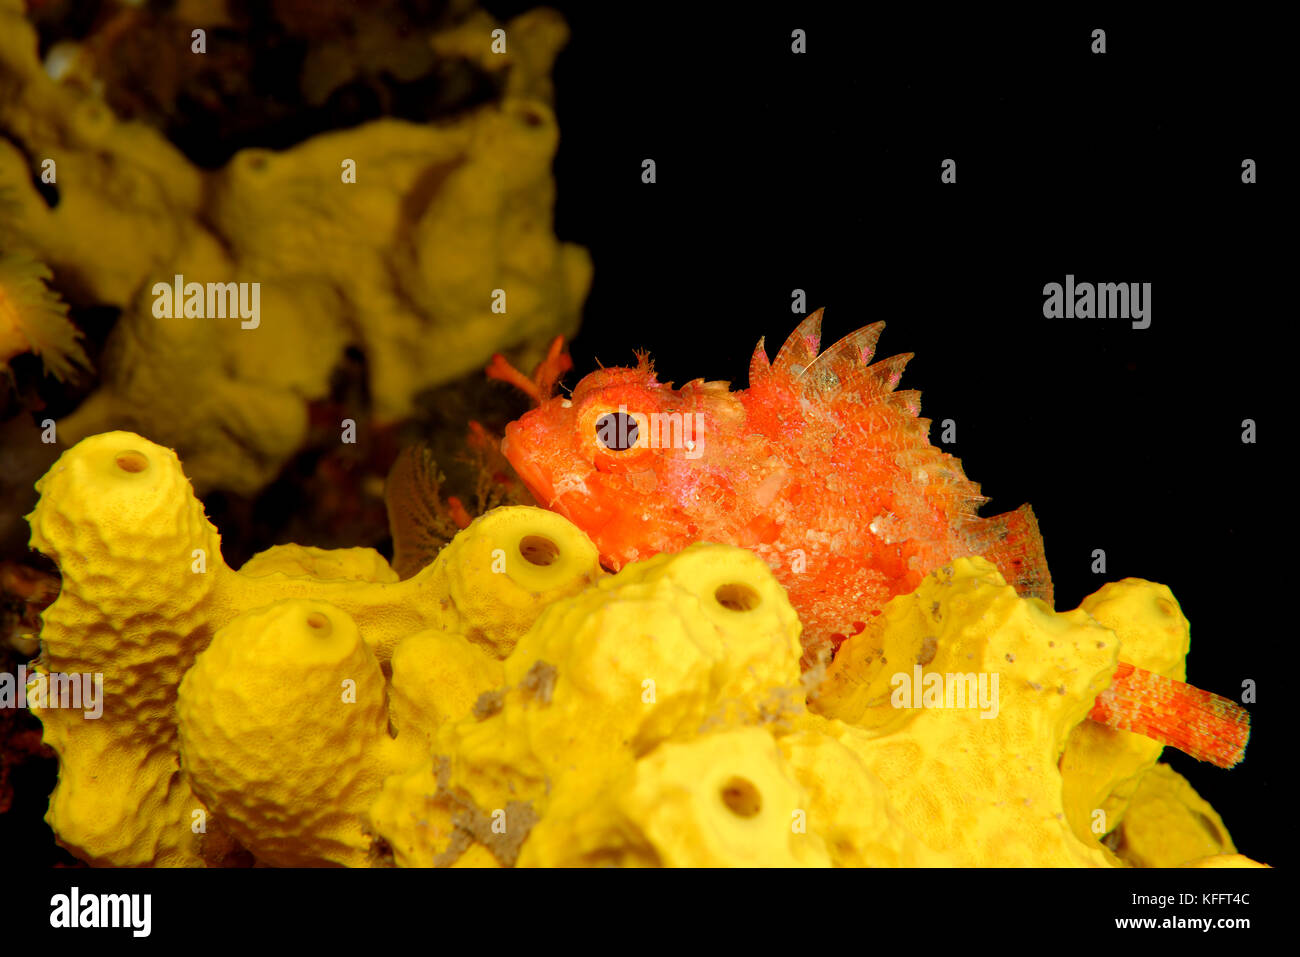 Small red scorpionfish and Golden sponge, Scorpaena notata and Aplysina aerophoba, Adriatic Sea, Mediterranean Sea, Kornati, Dalmatia, Croatia Stock Photo